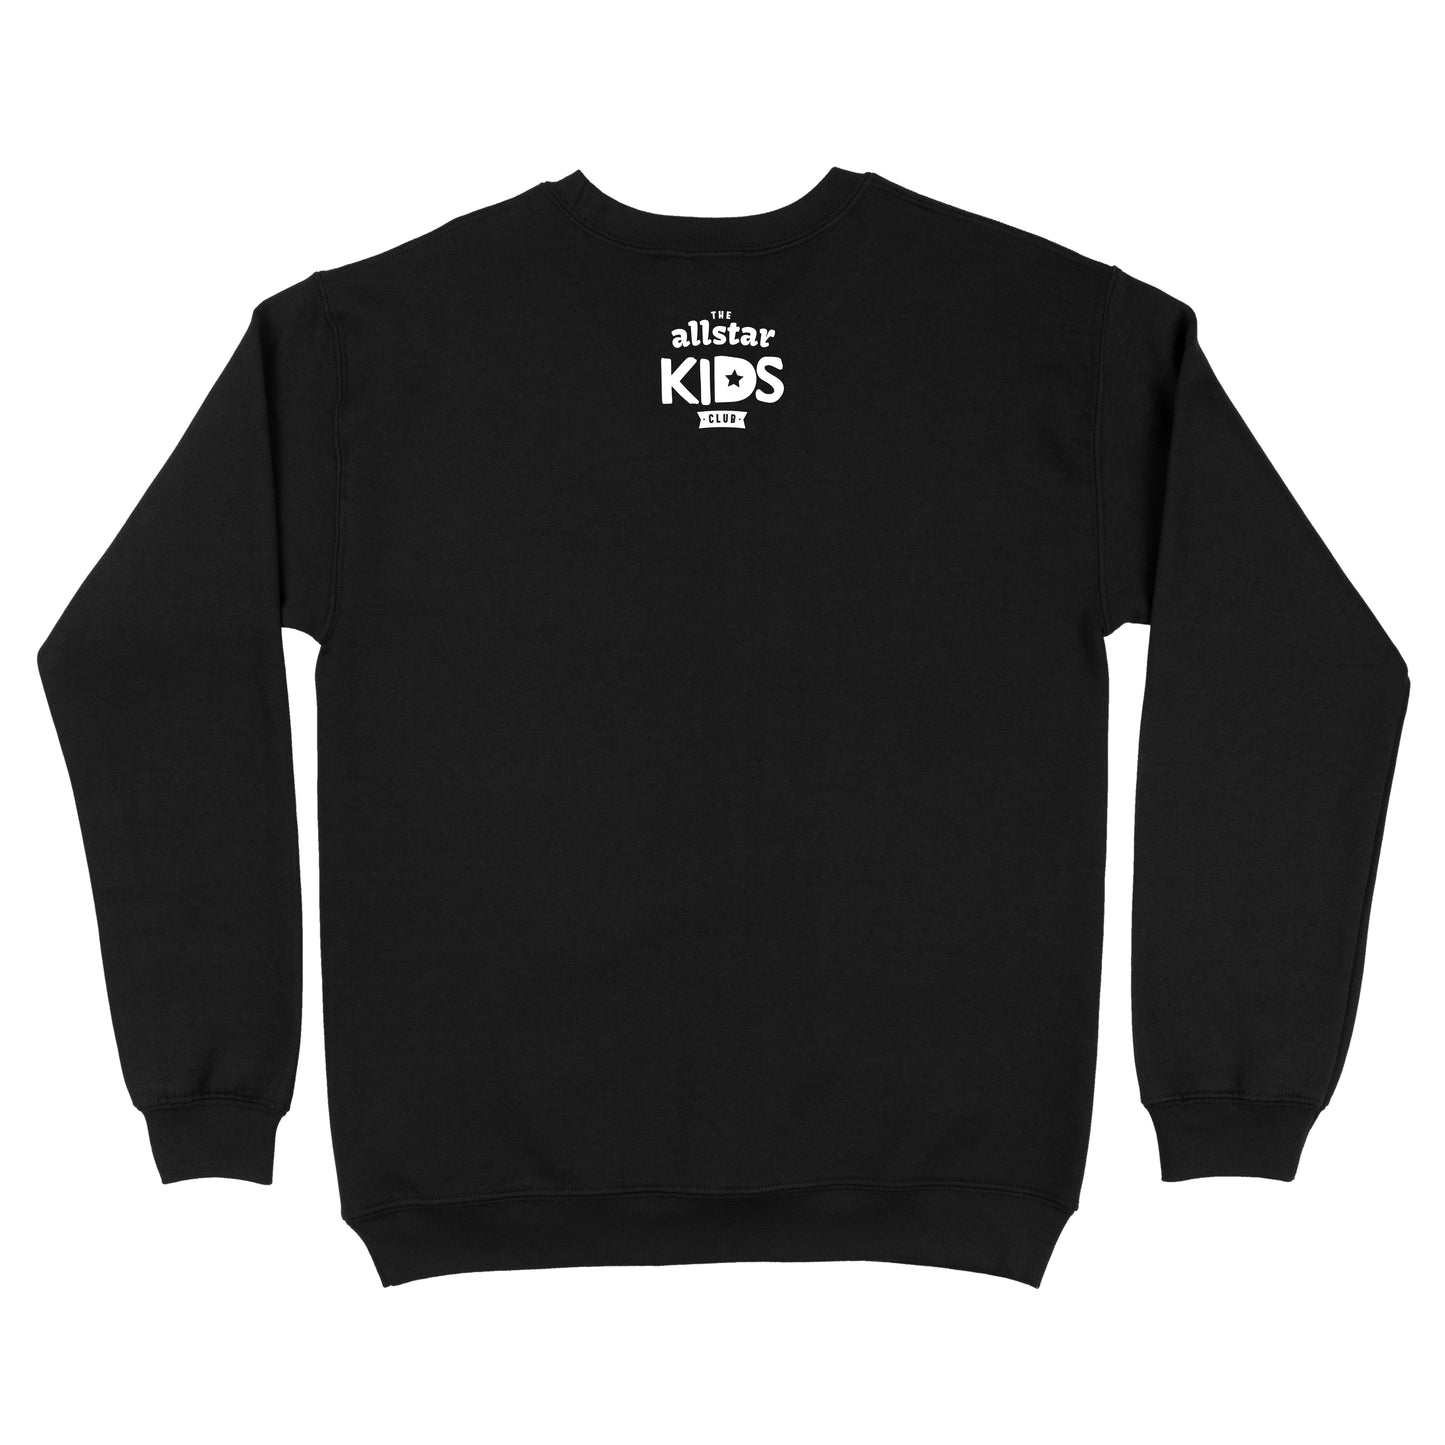 All Star Colors Black Sweatshirt